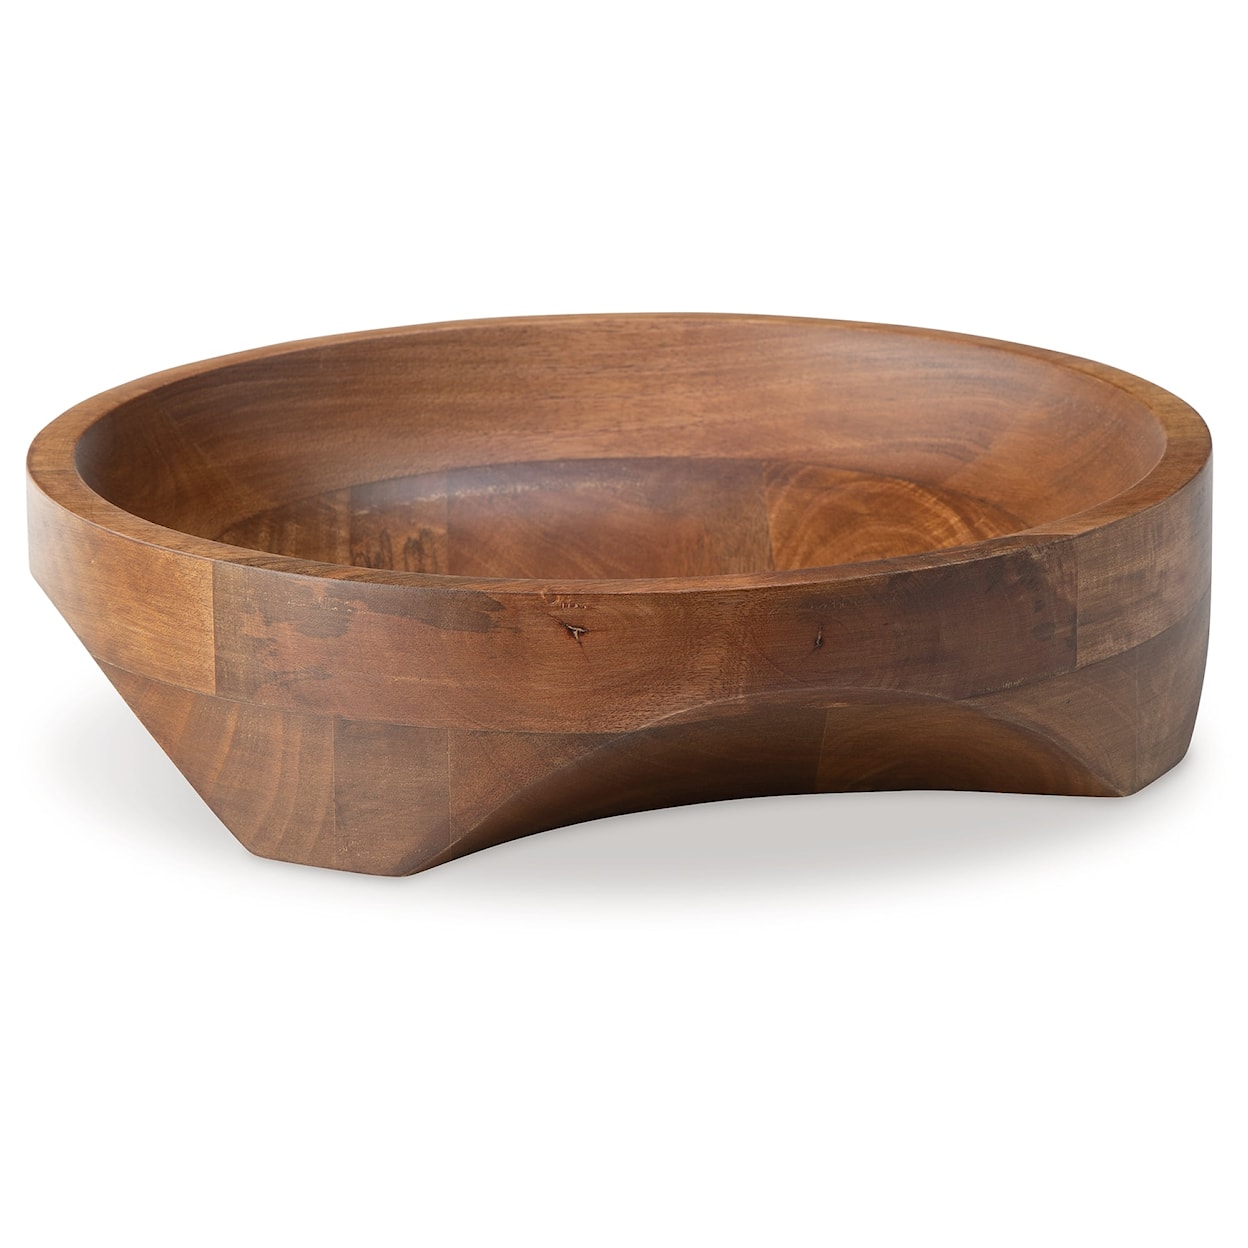 Ashley Furniture Signature Design Myrtewood Bowl